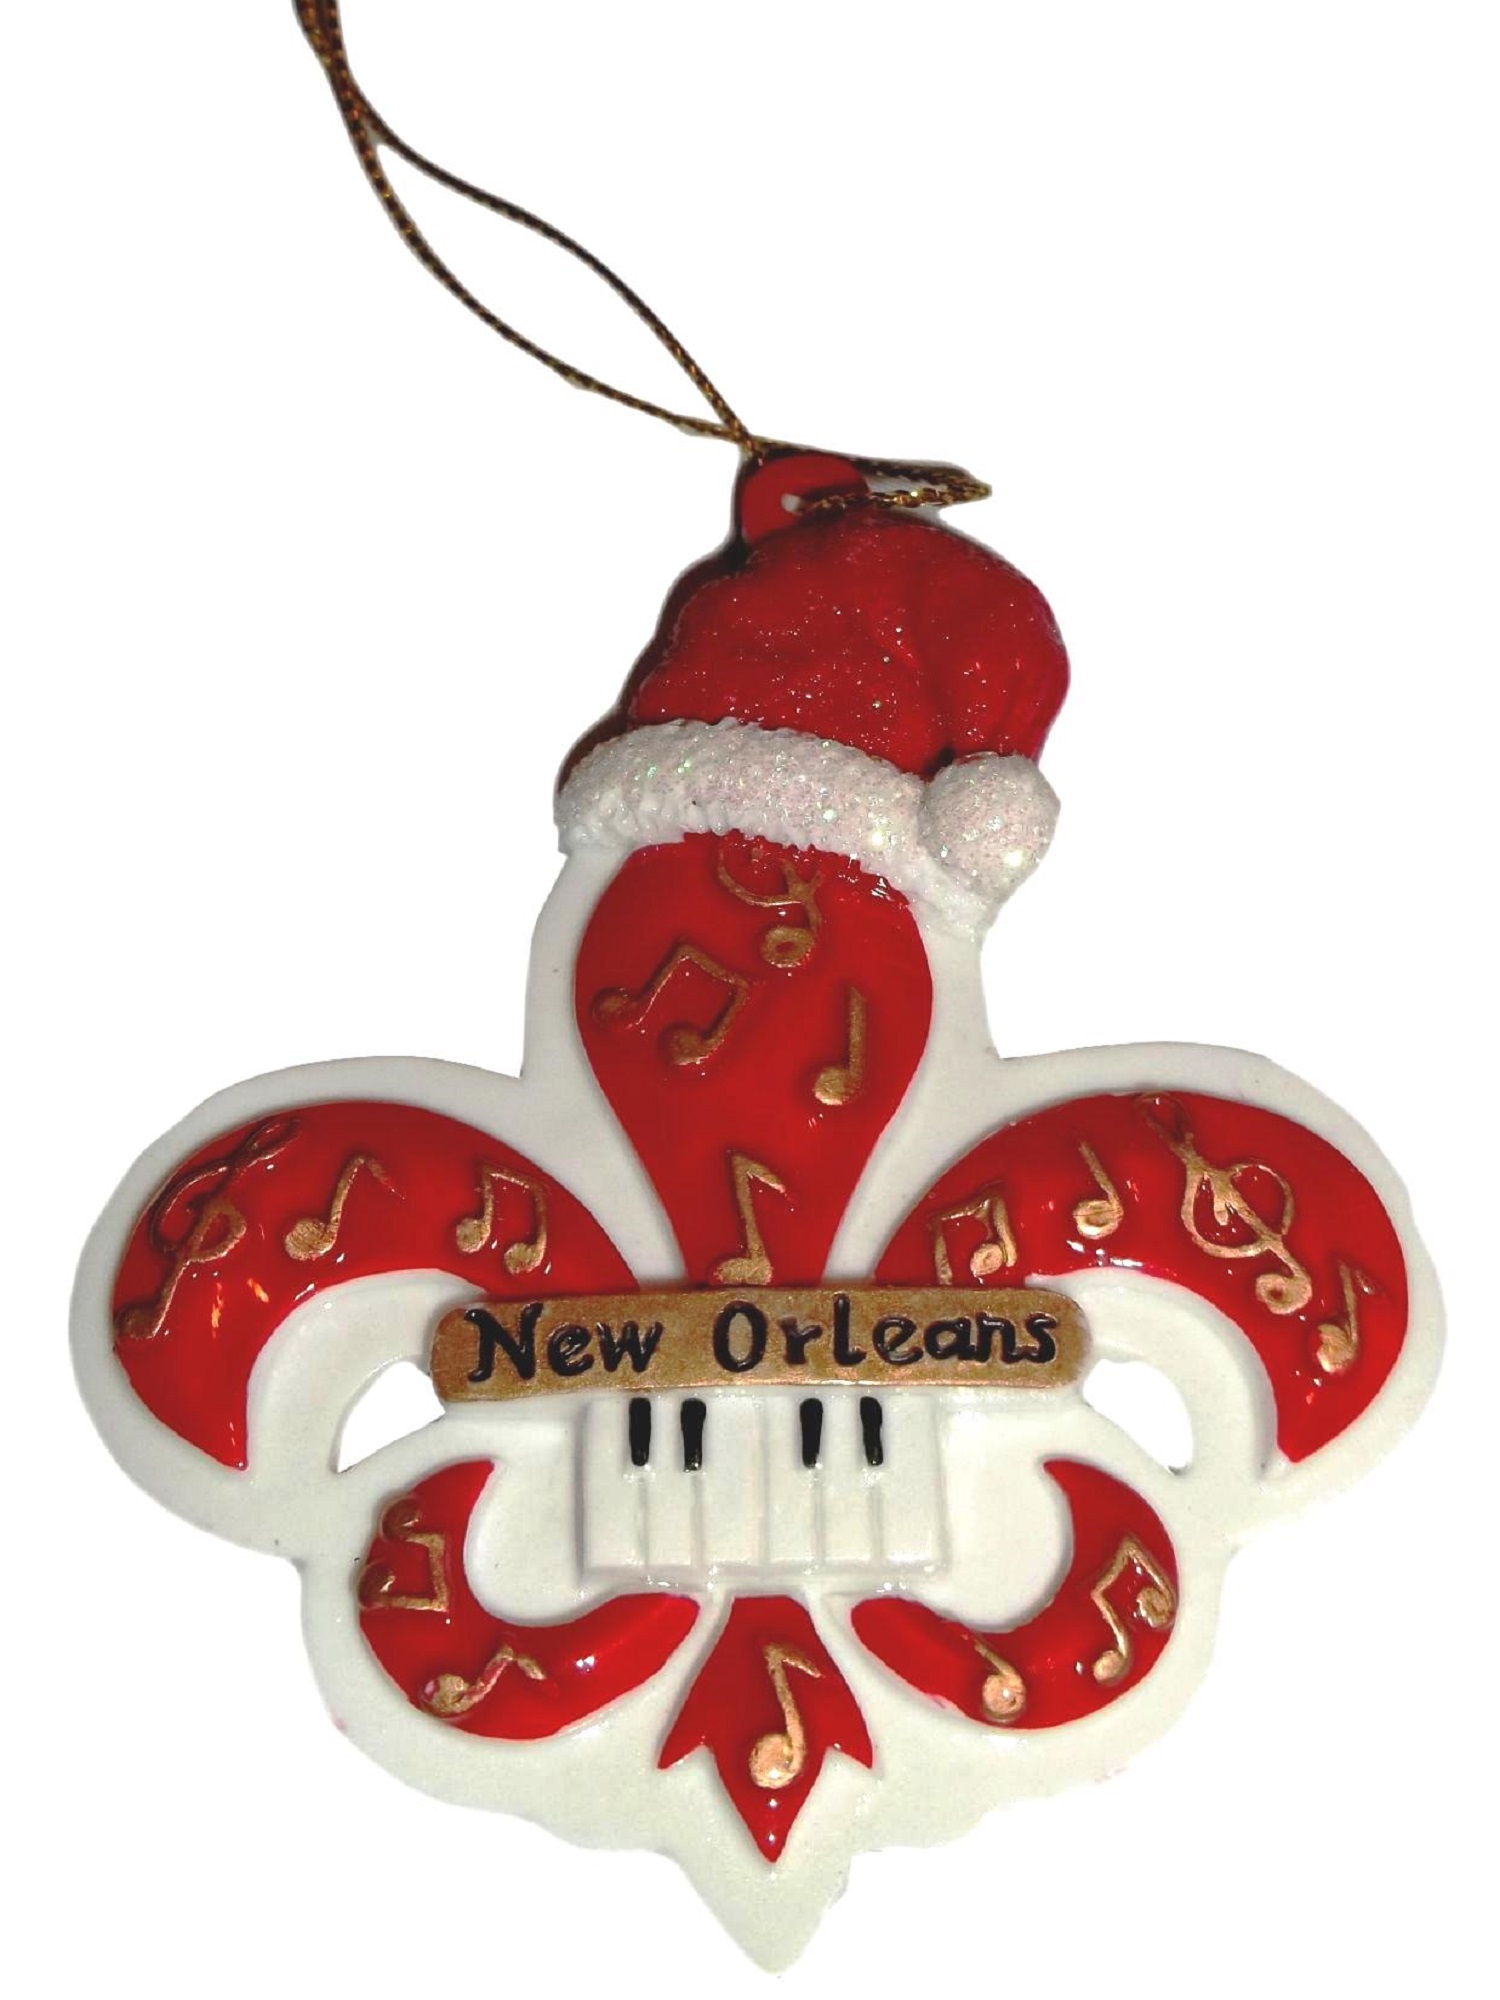 MGPS Red Music Fleur De Lis New Orleans Christmas Ornament Party Favors - image 1 of 1